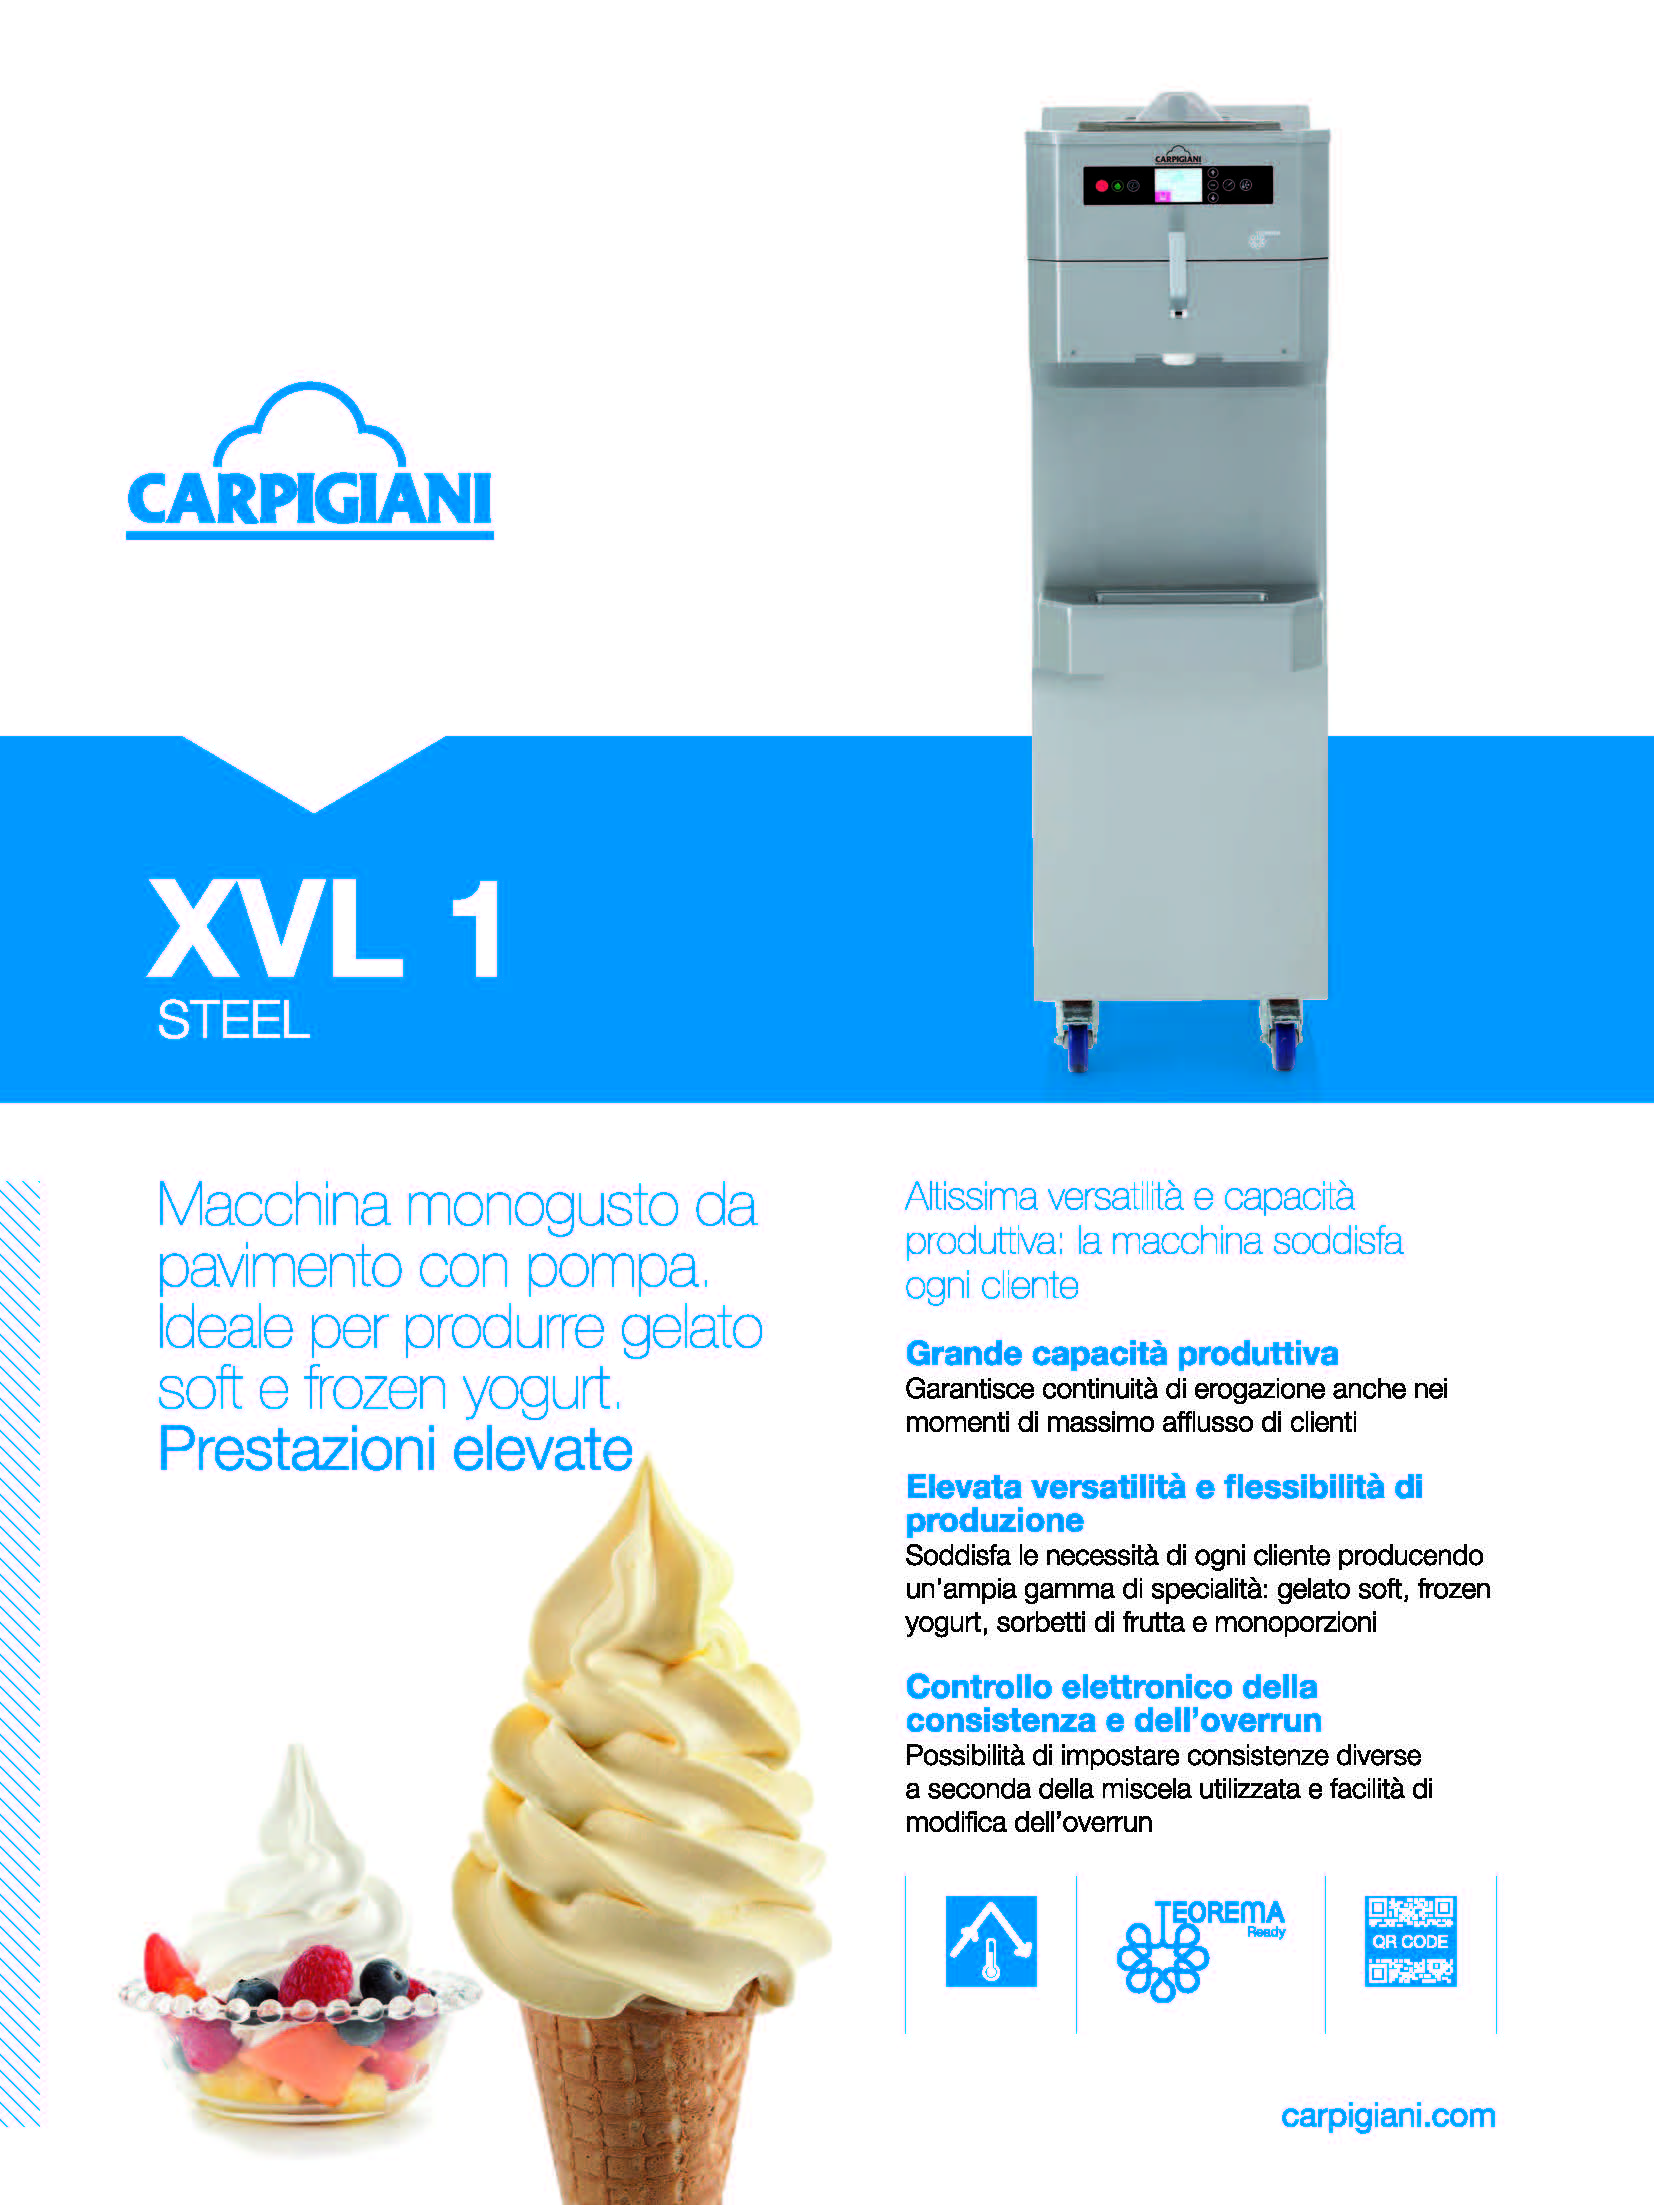 Carpigiani – XVL 1 STEEL